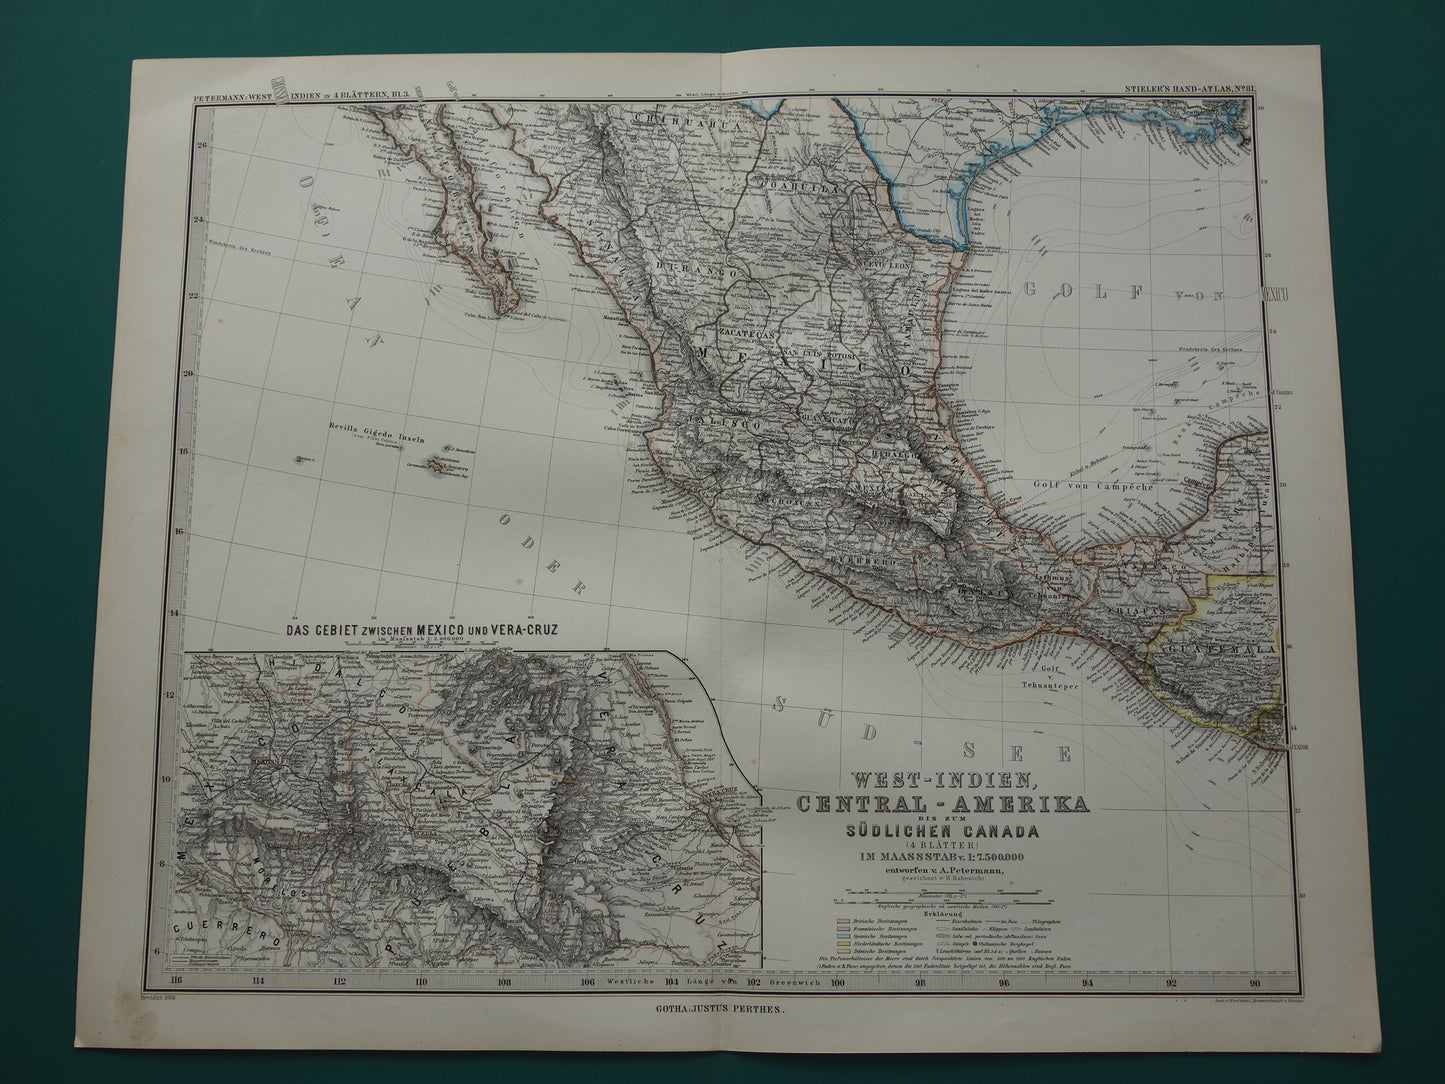 MEXICO oude handgekleurde landkaart van Mexico uit 1886 originele antieke kaart met jaartal